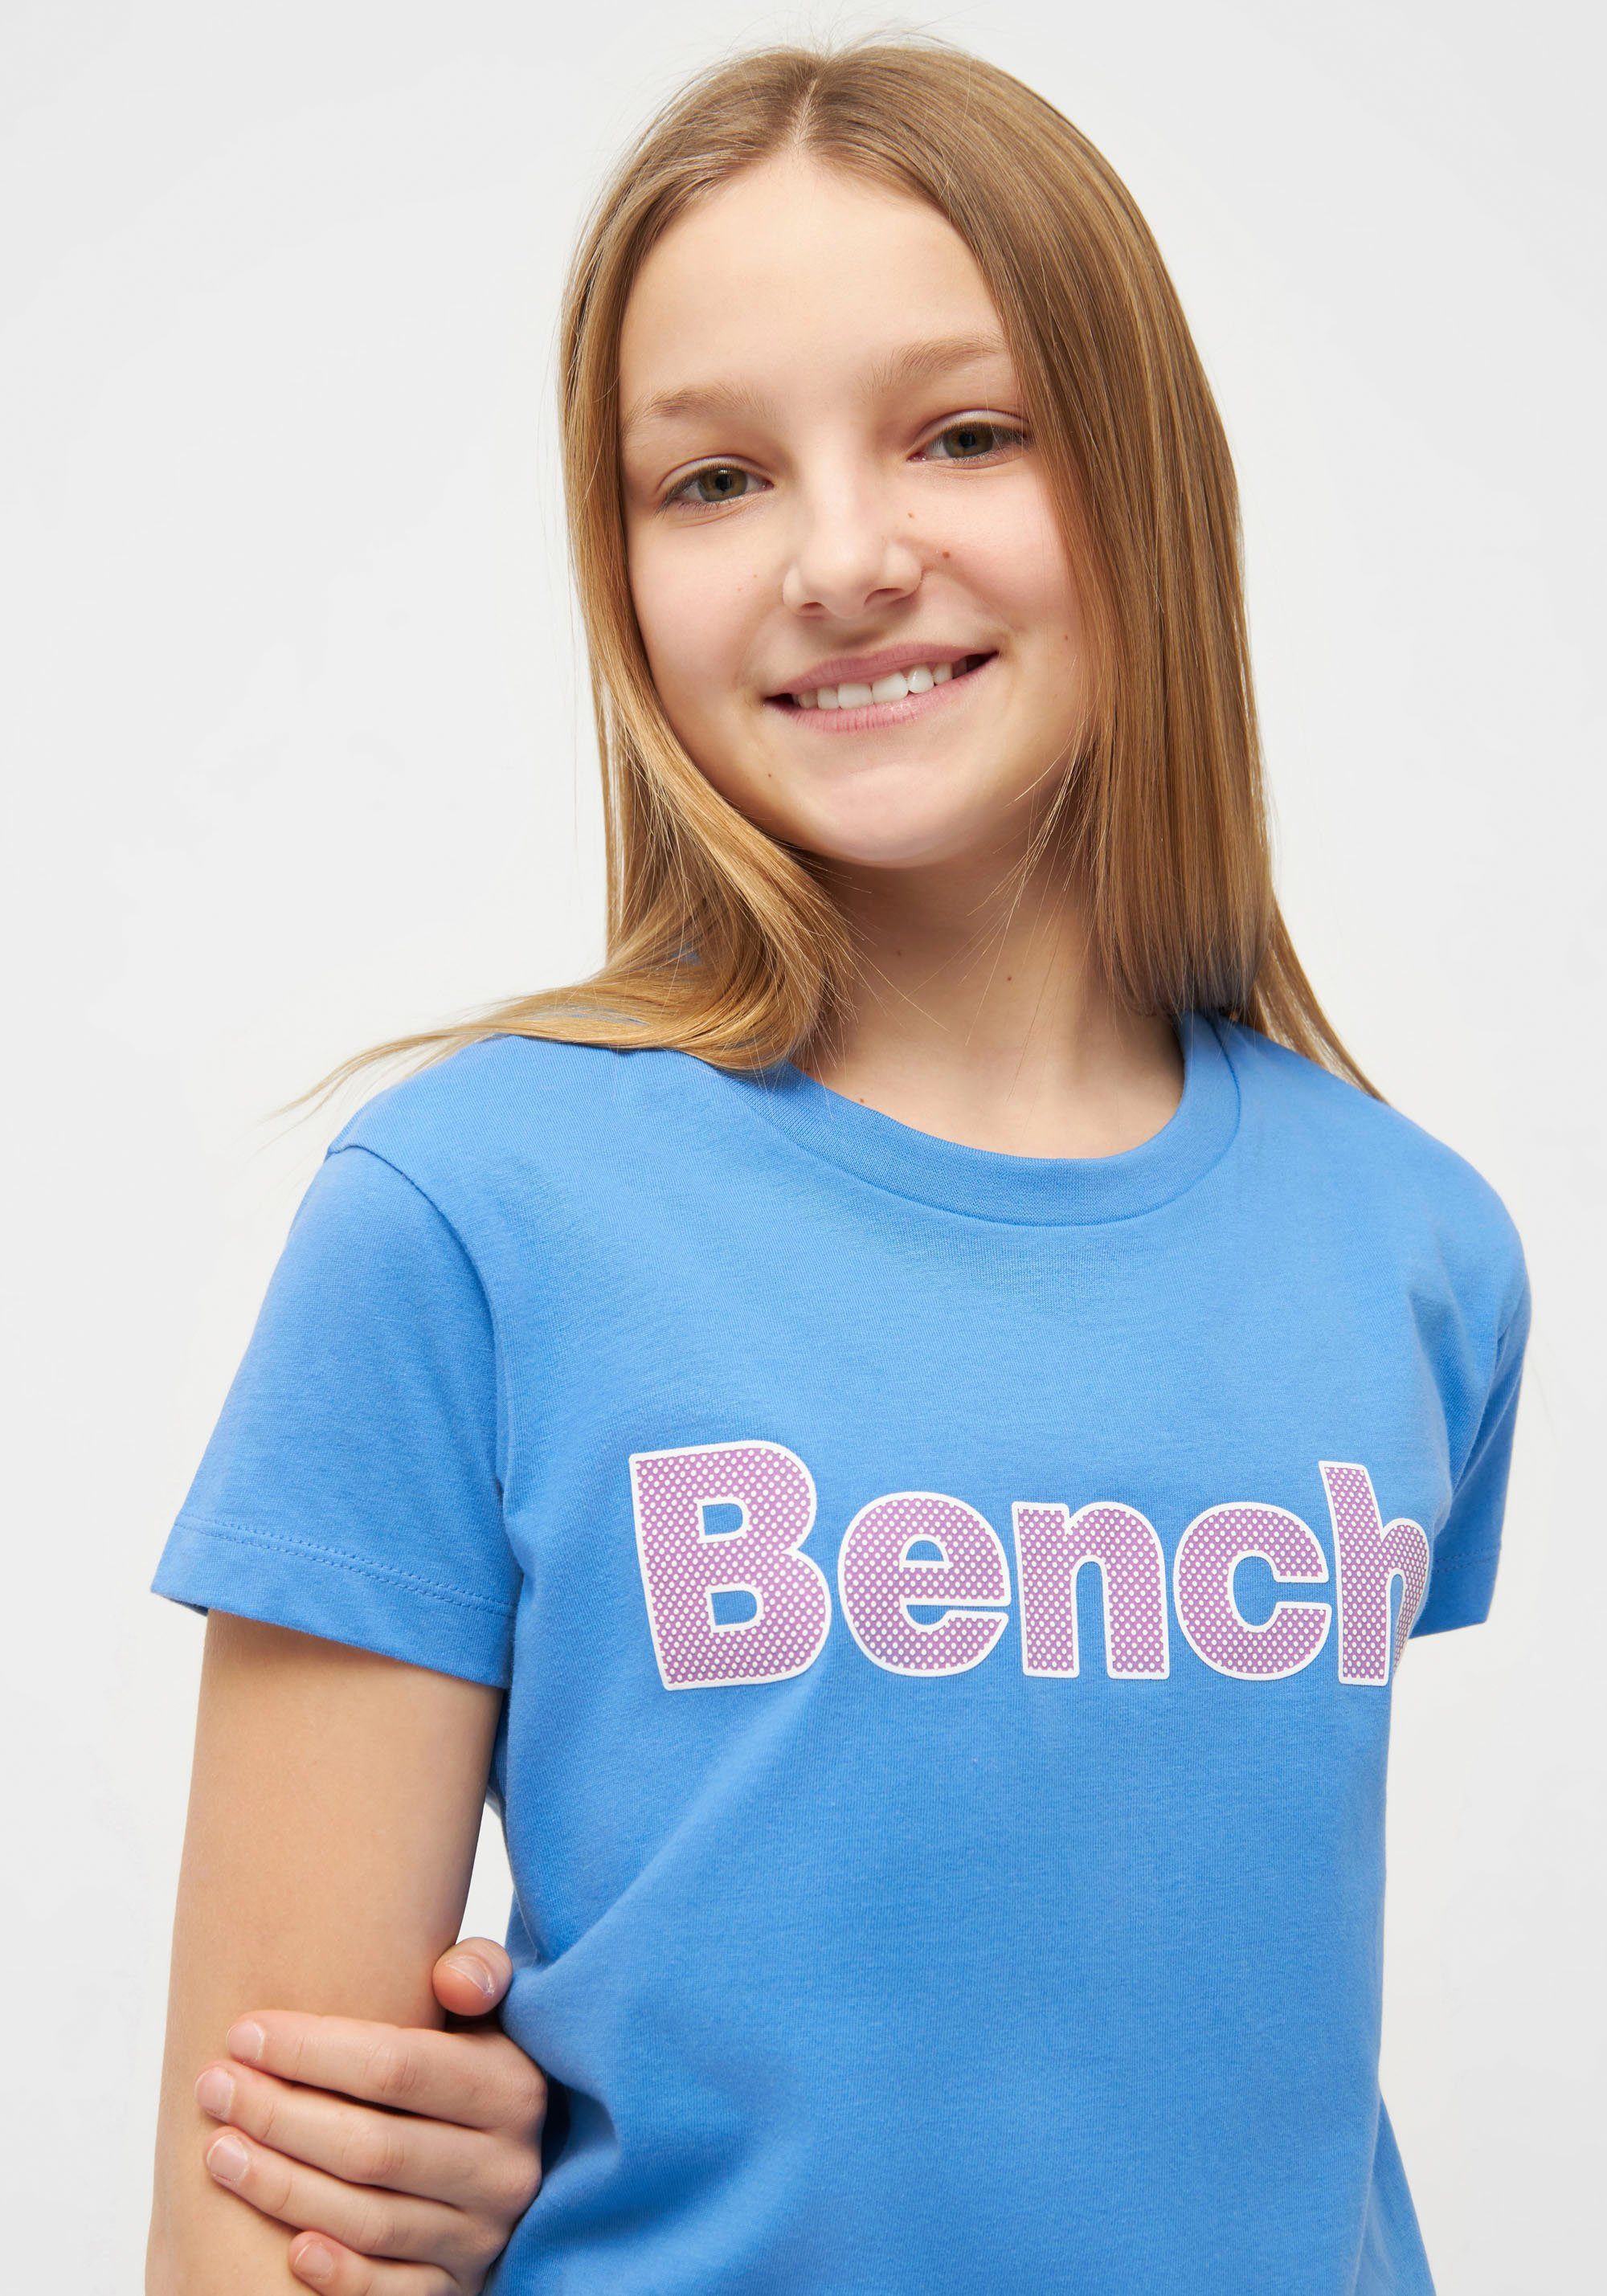 Bench. T-Shirt LEORAG DENIMBLUE